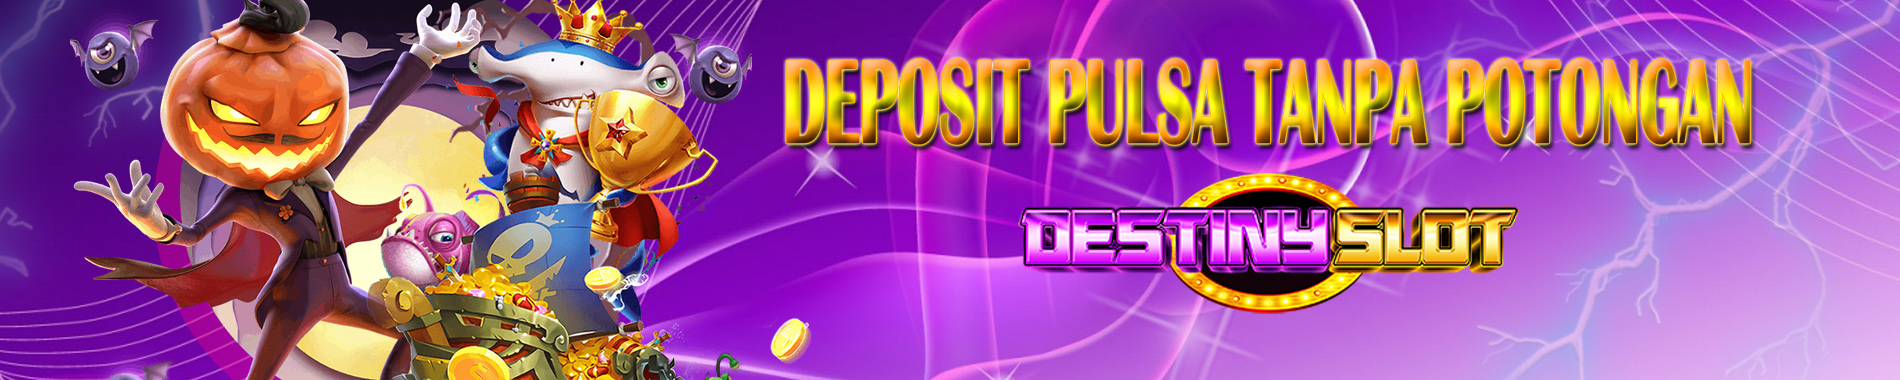 DestinySlot Deposit Pulsa Tanpa Potongan